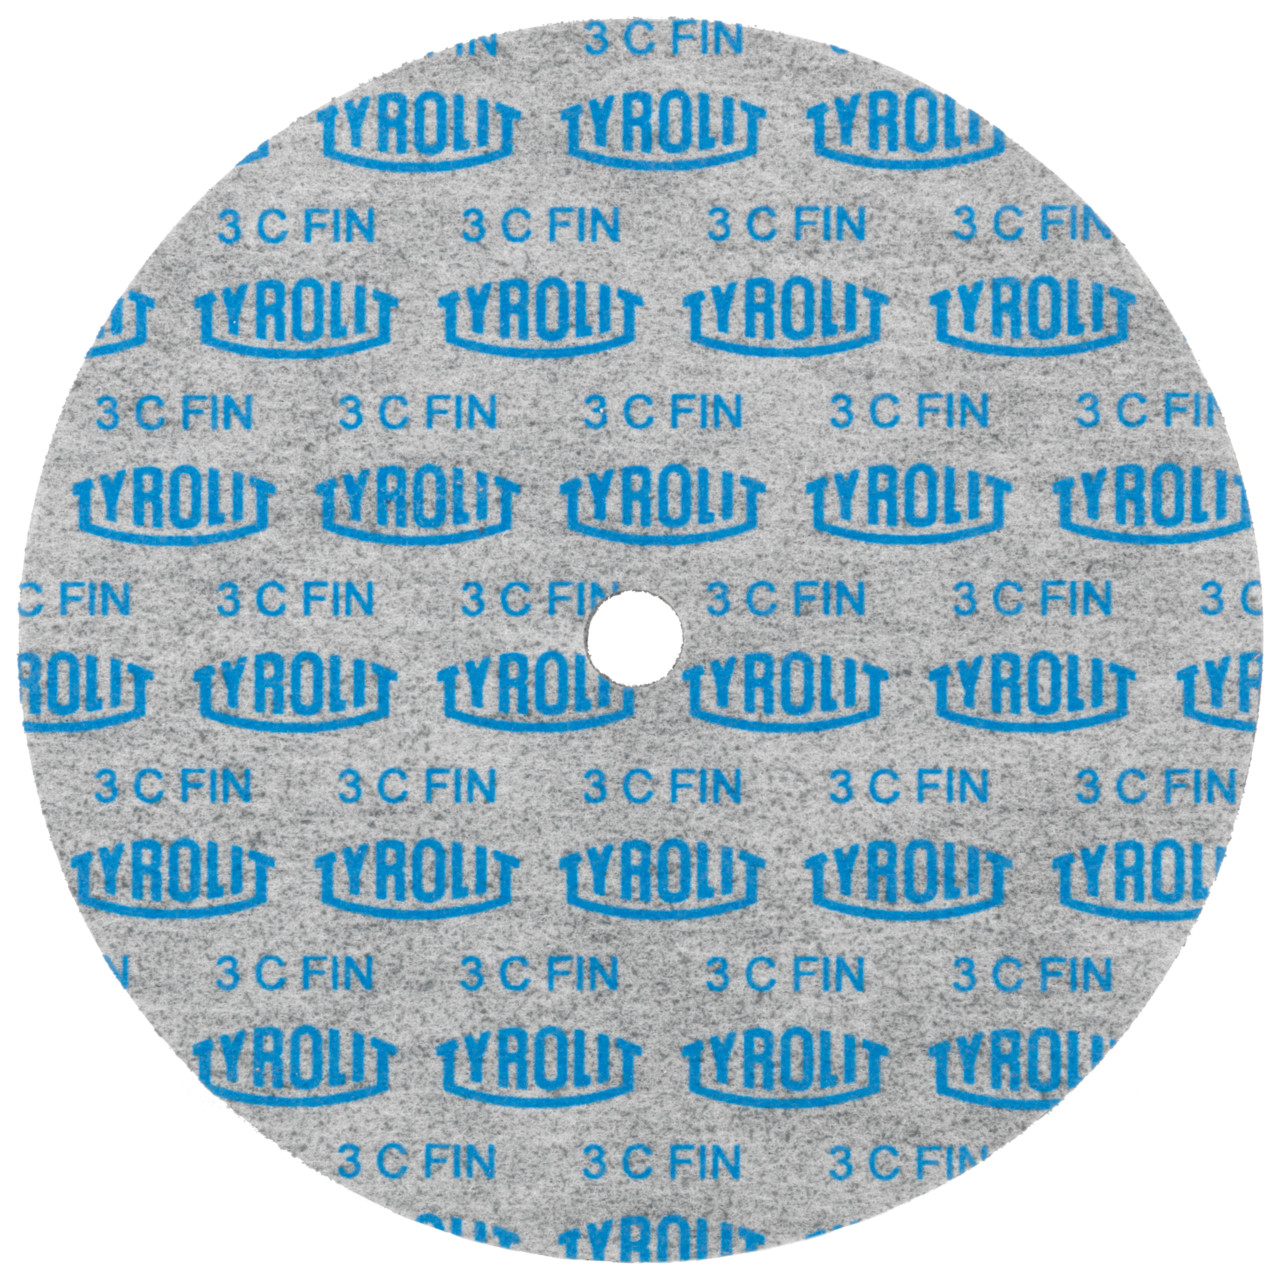 Tyrolit Discos compactos prensados DxDxH 152x25x25,4 Inserto universal, 6 C FEIN, forma: 1, Art. 34190309